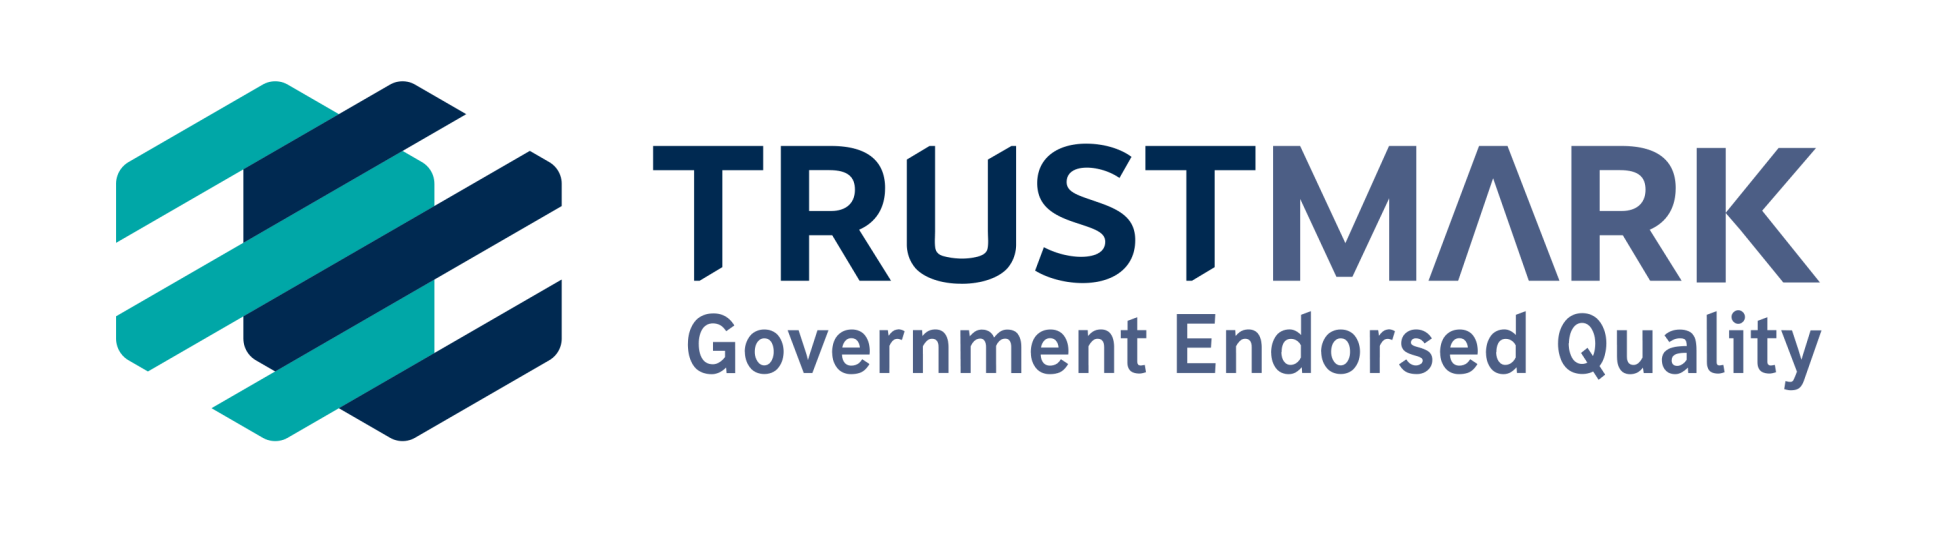 Trustmark Accreditation Logo